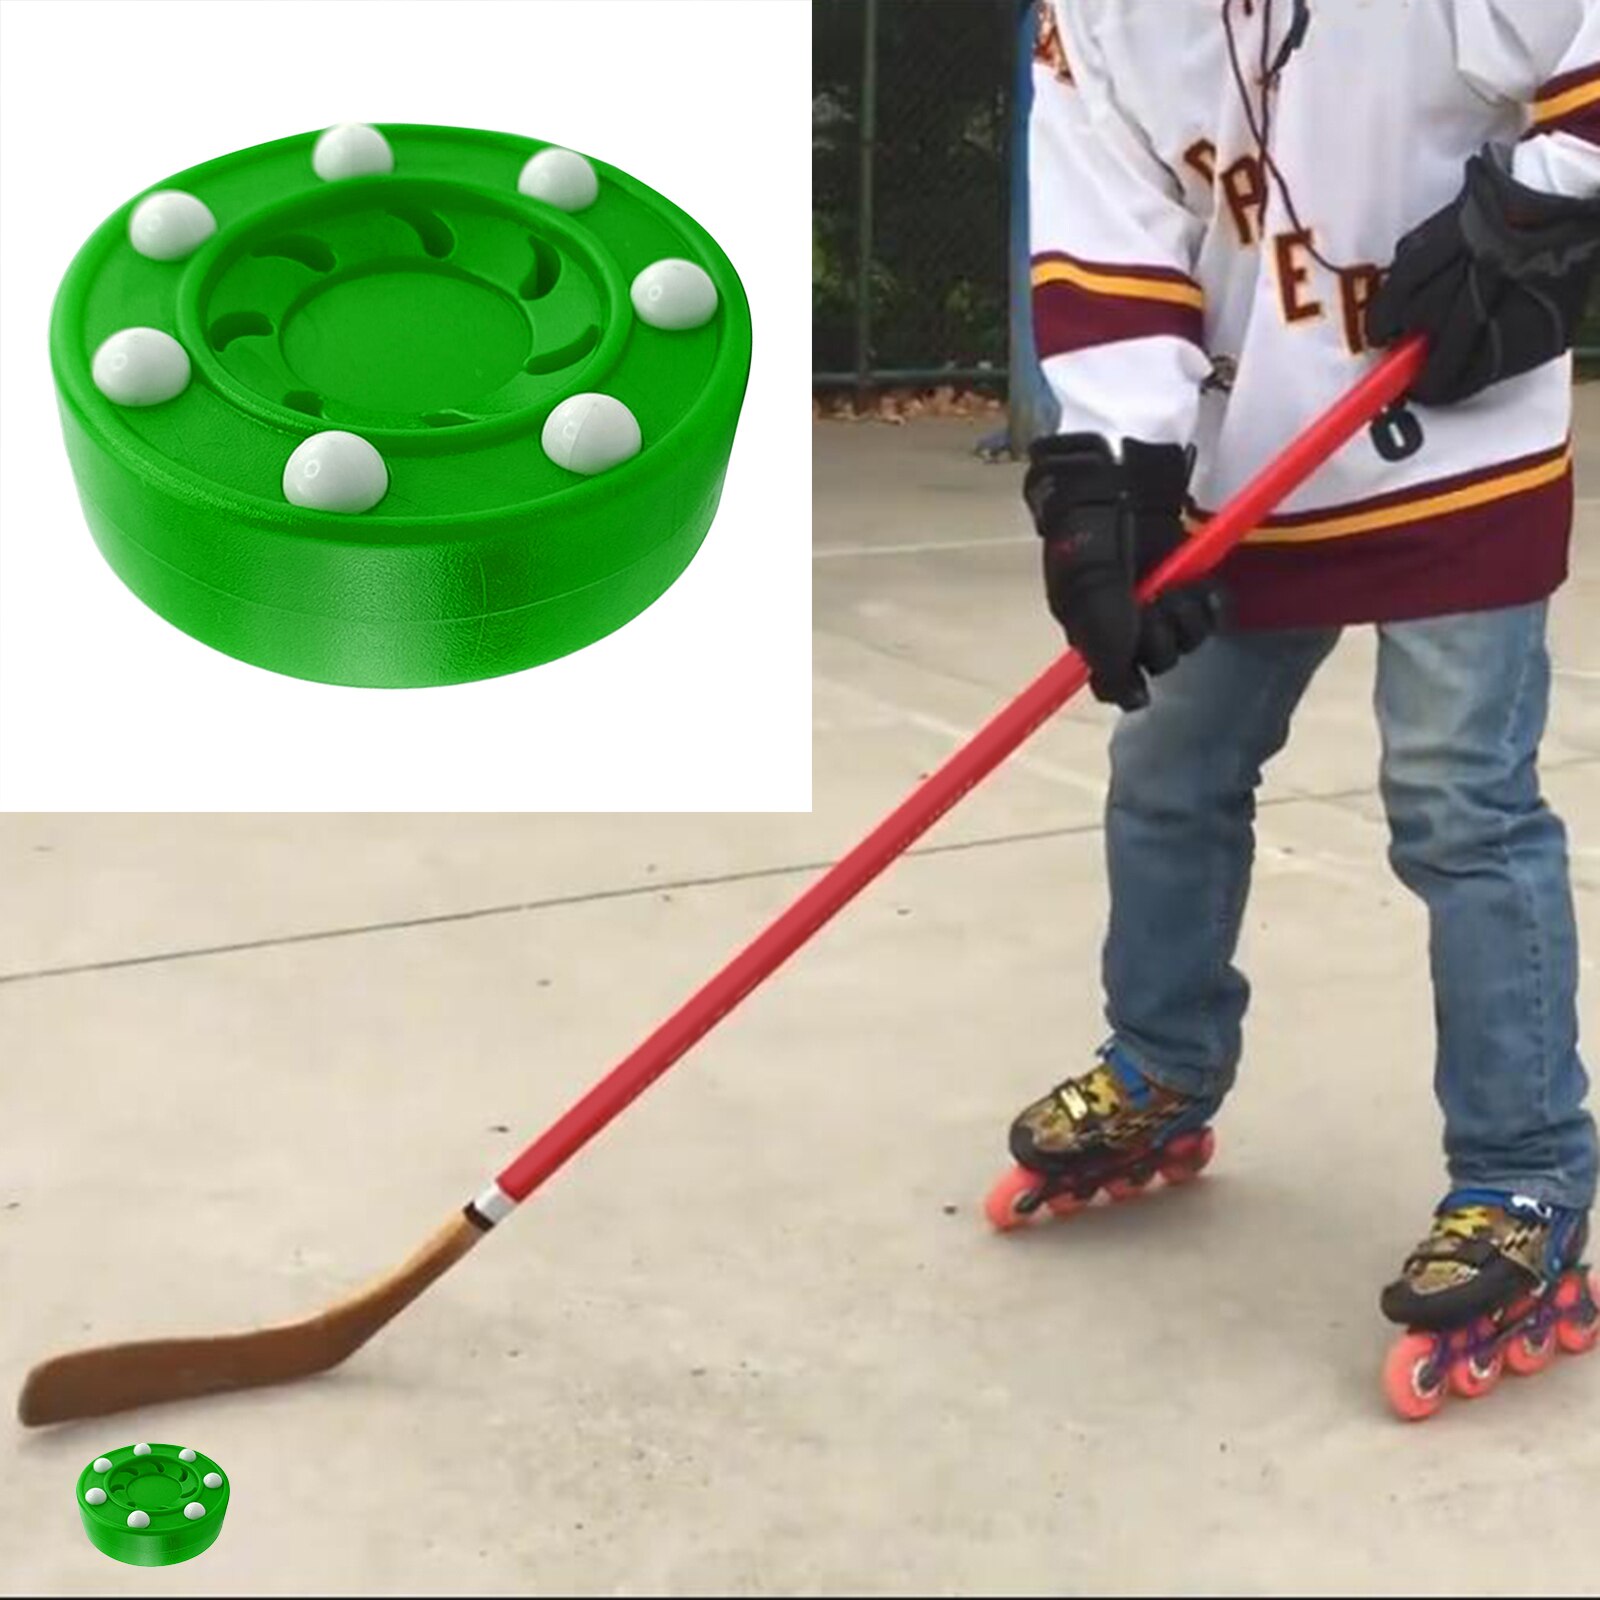 Premium Street Hockey Pucks Replacement, Roller Hockey Puck for better Shooting, Passing, Stick handling, Quad Hockey Puck Ball